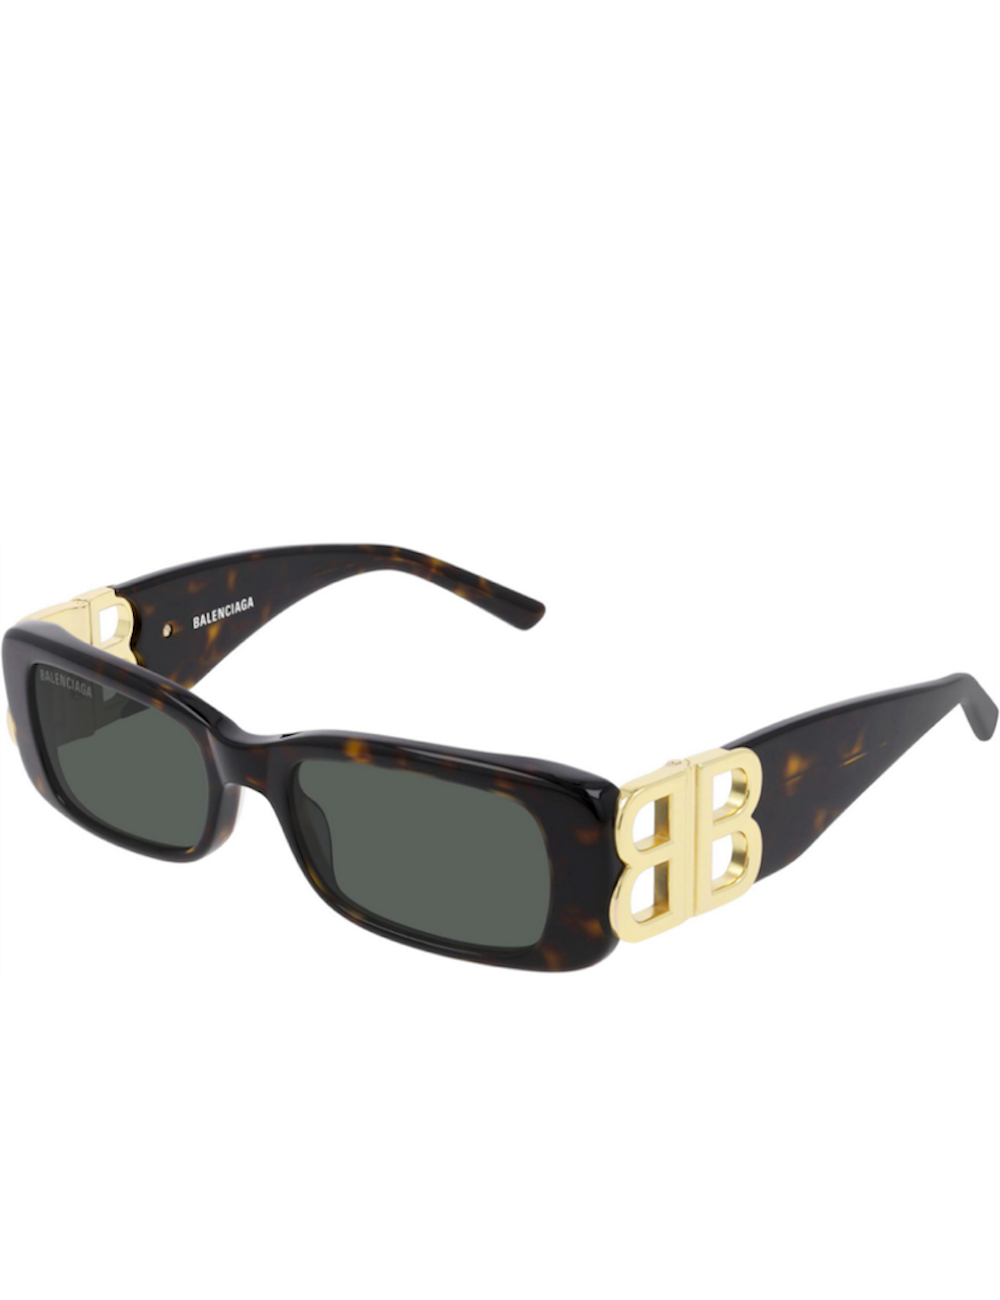 NEW Balenciaga narrow rectangular pointed sunglasses BB0047S col001 black   Occhiali  Ottica Scauzillo